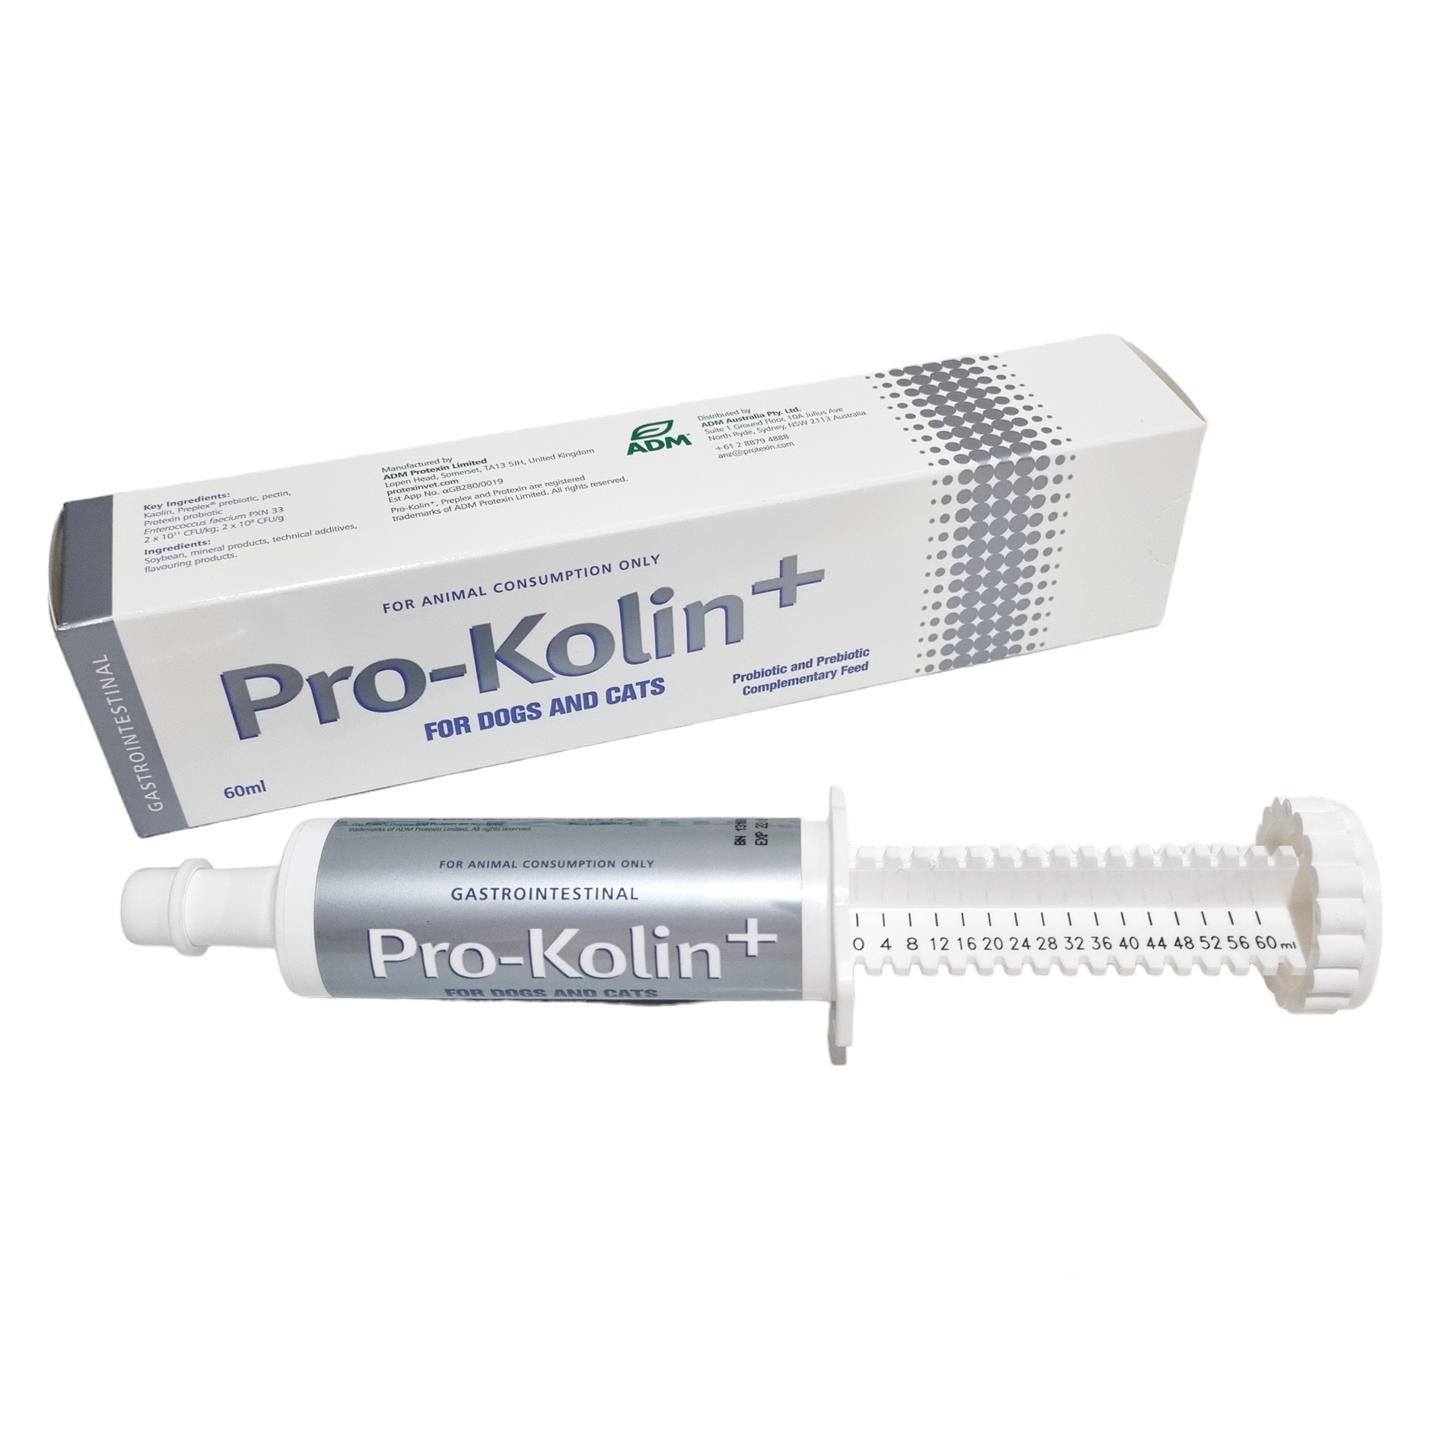 Pro-Kolin+ for Dogs & Cats - Gastrointestinal